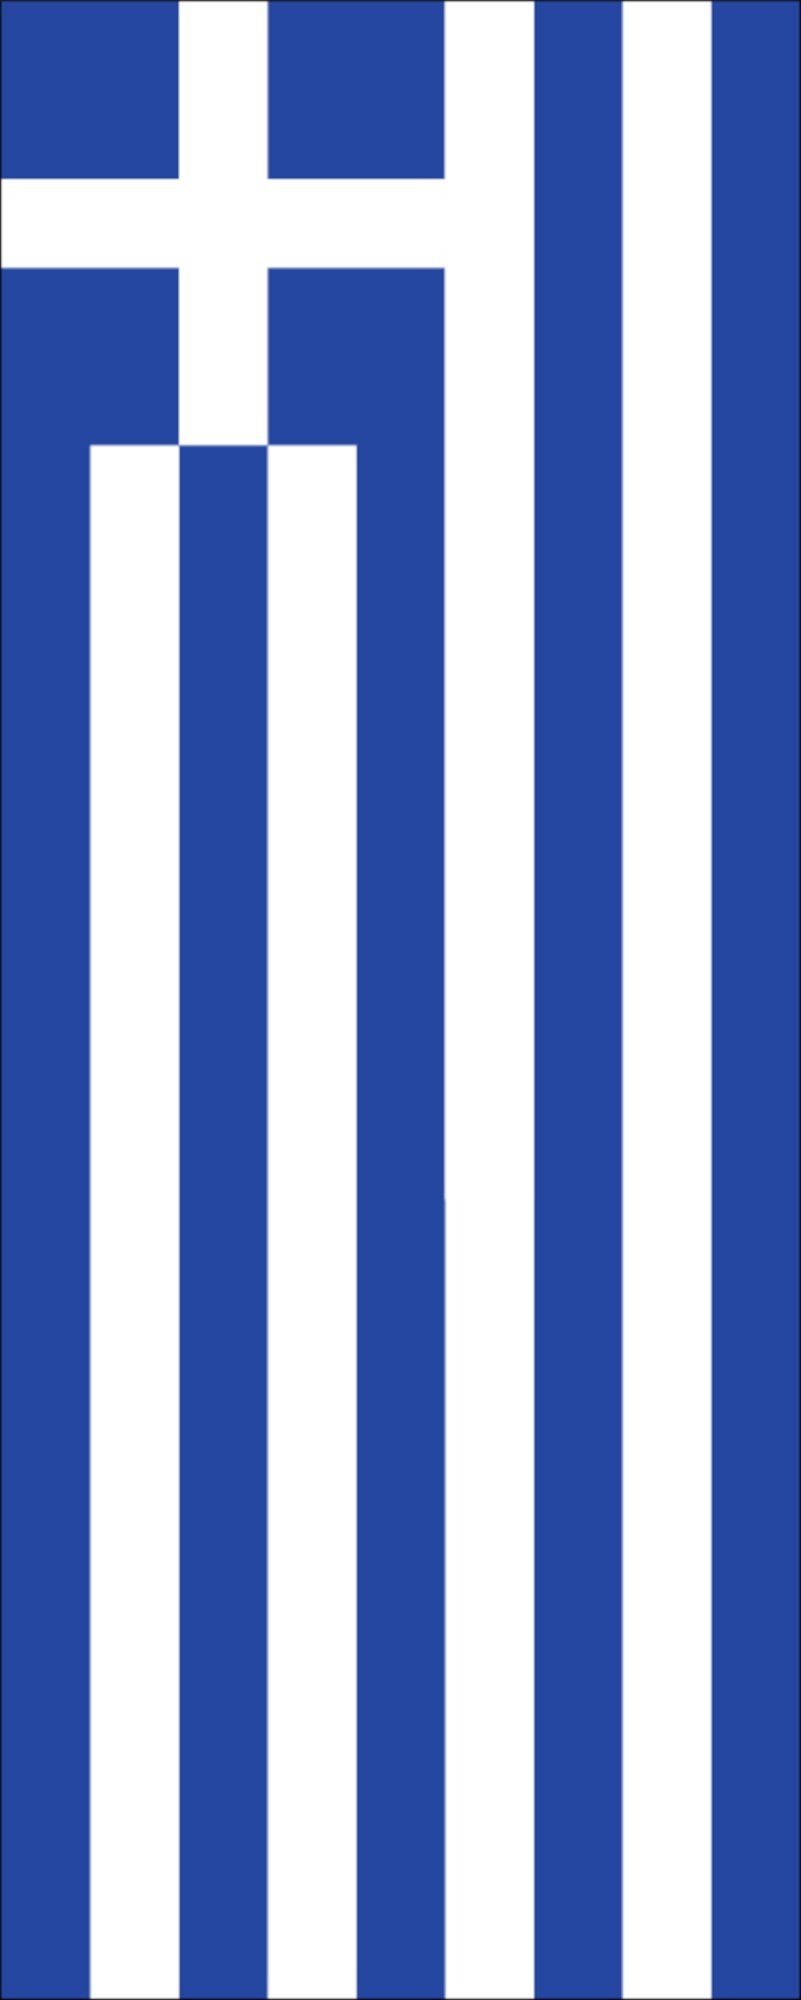 110 Hochformat Griechenland g/m² Flagge Flagge flaggenmeer